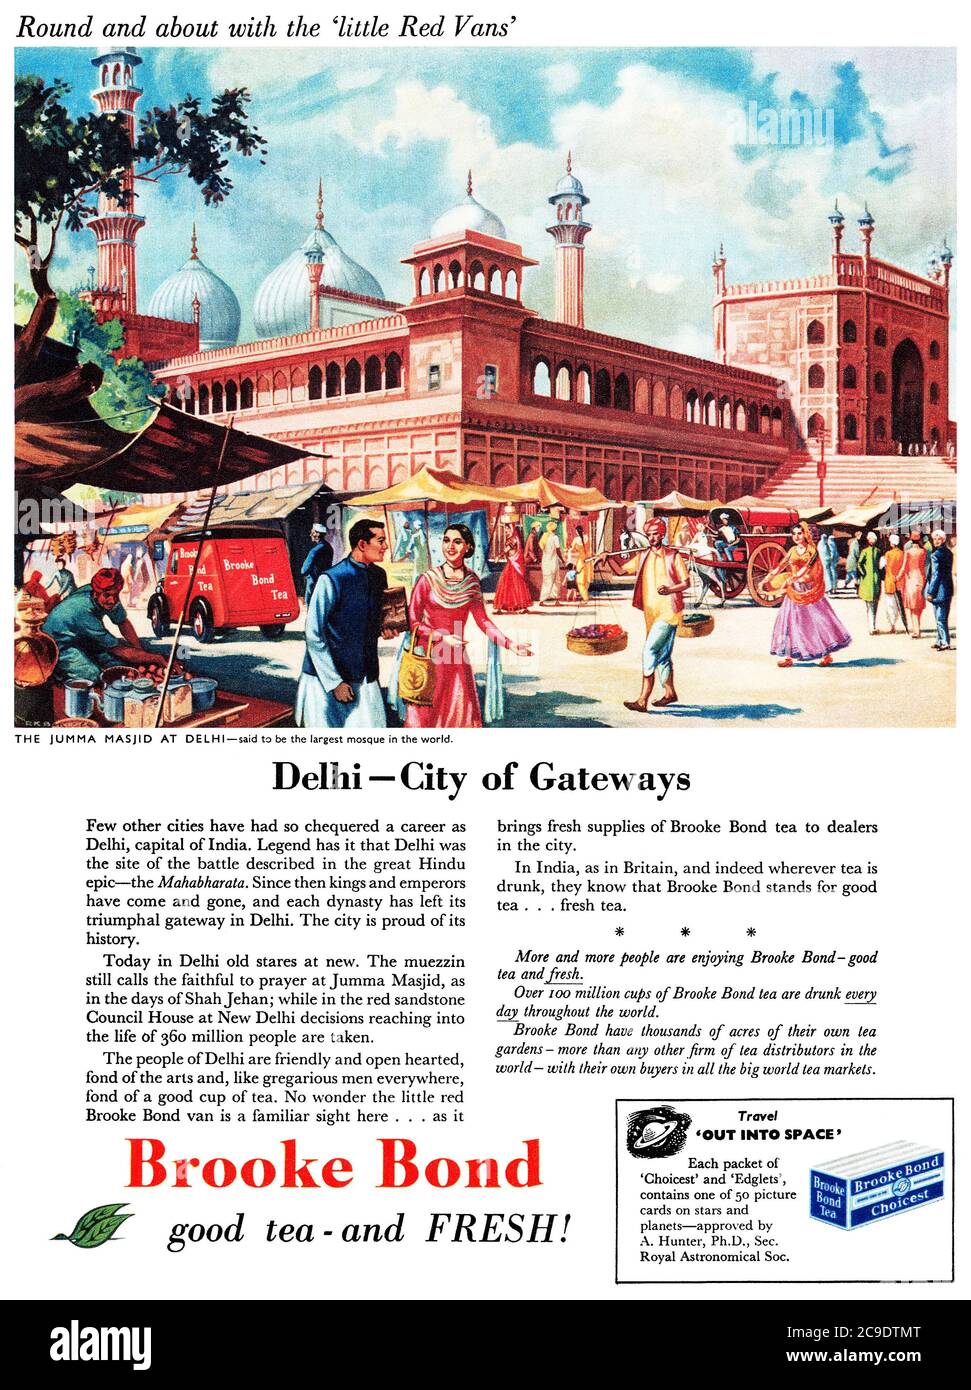 1950s British advertisement for Brooke Bond tea, featuring an illustration of the Juma Masjid mosque in Delhi, India. Stock Photo